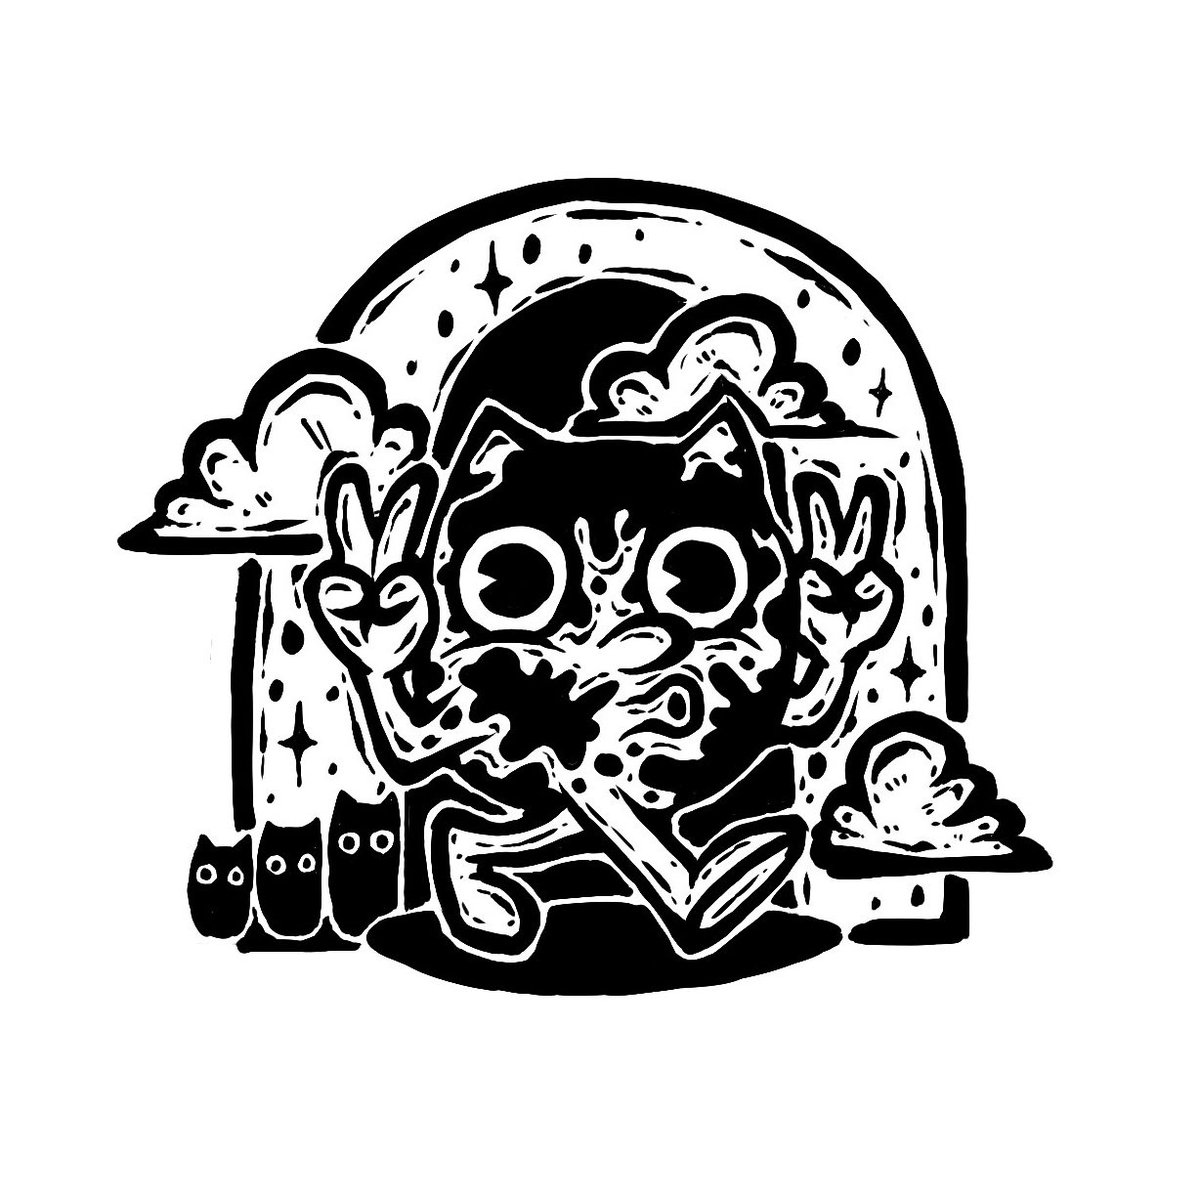 Cute Earth Cat 🌎🐈‍⬛

#catvember #catart #cat #catdrawing #catillustration #drawingchallenge #ink #art #inkwork #blackandwhite #sketch #design #inking #inkwork #doodle #creative #artist #characterdesign #valioart